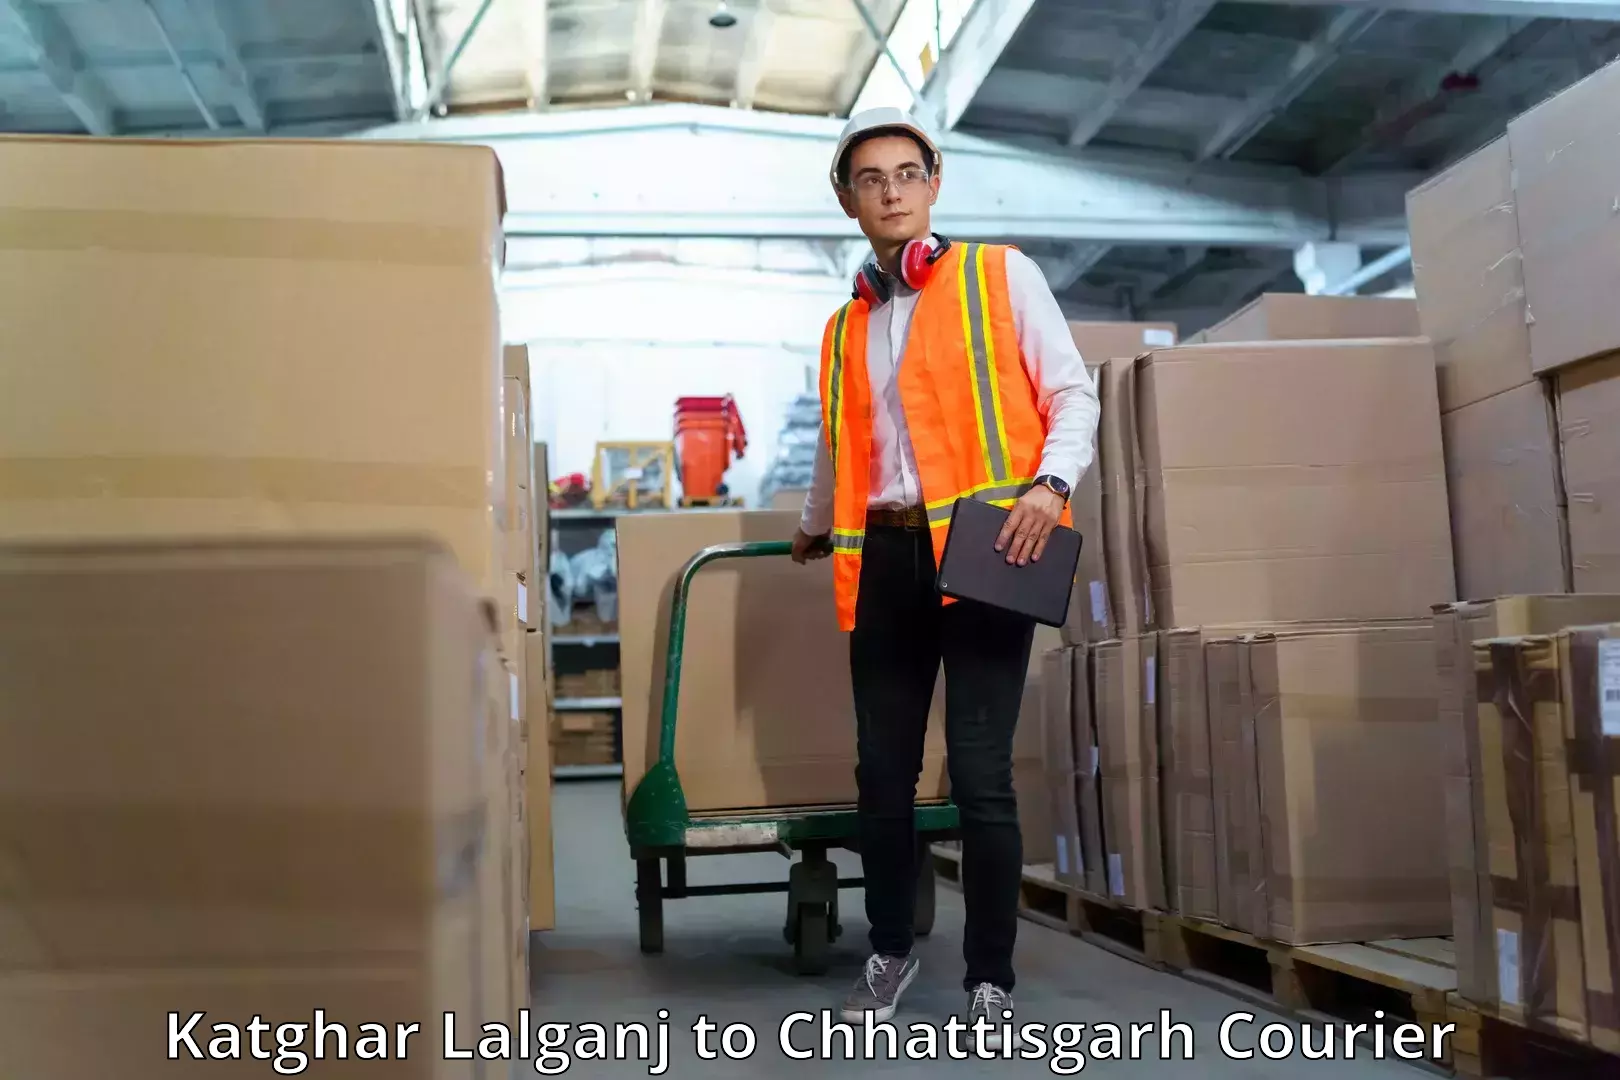 Global courier networks Katghar Lalganj to Raigarh